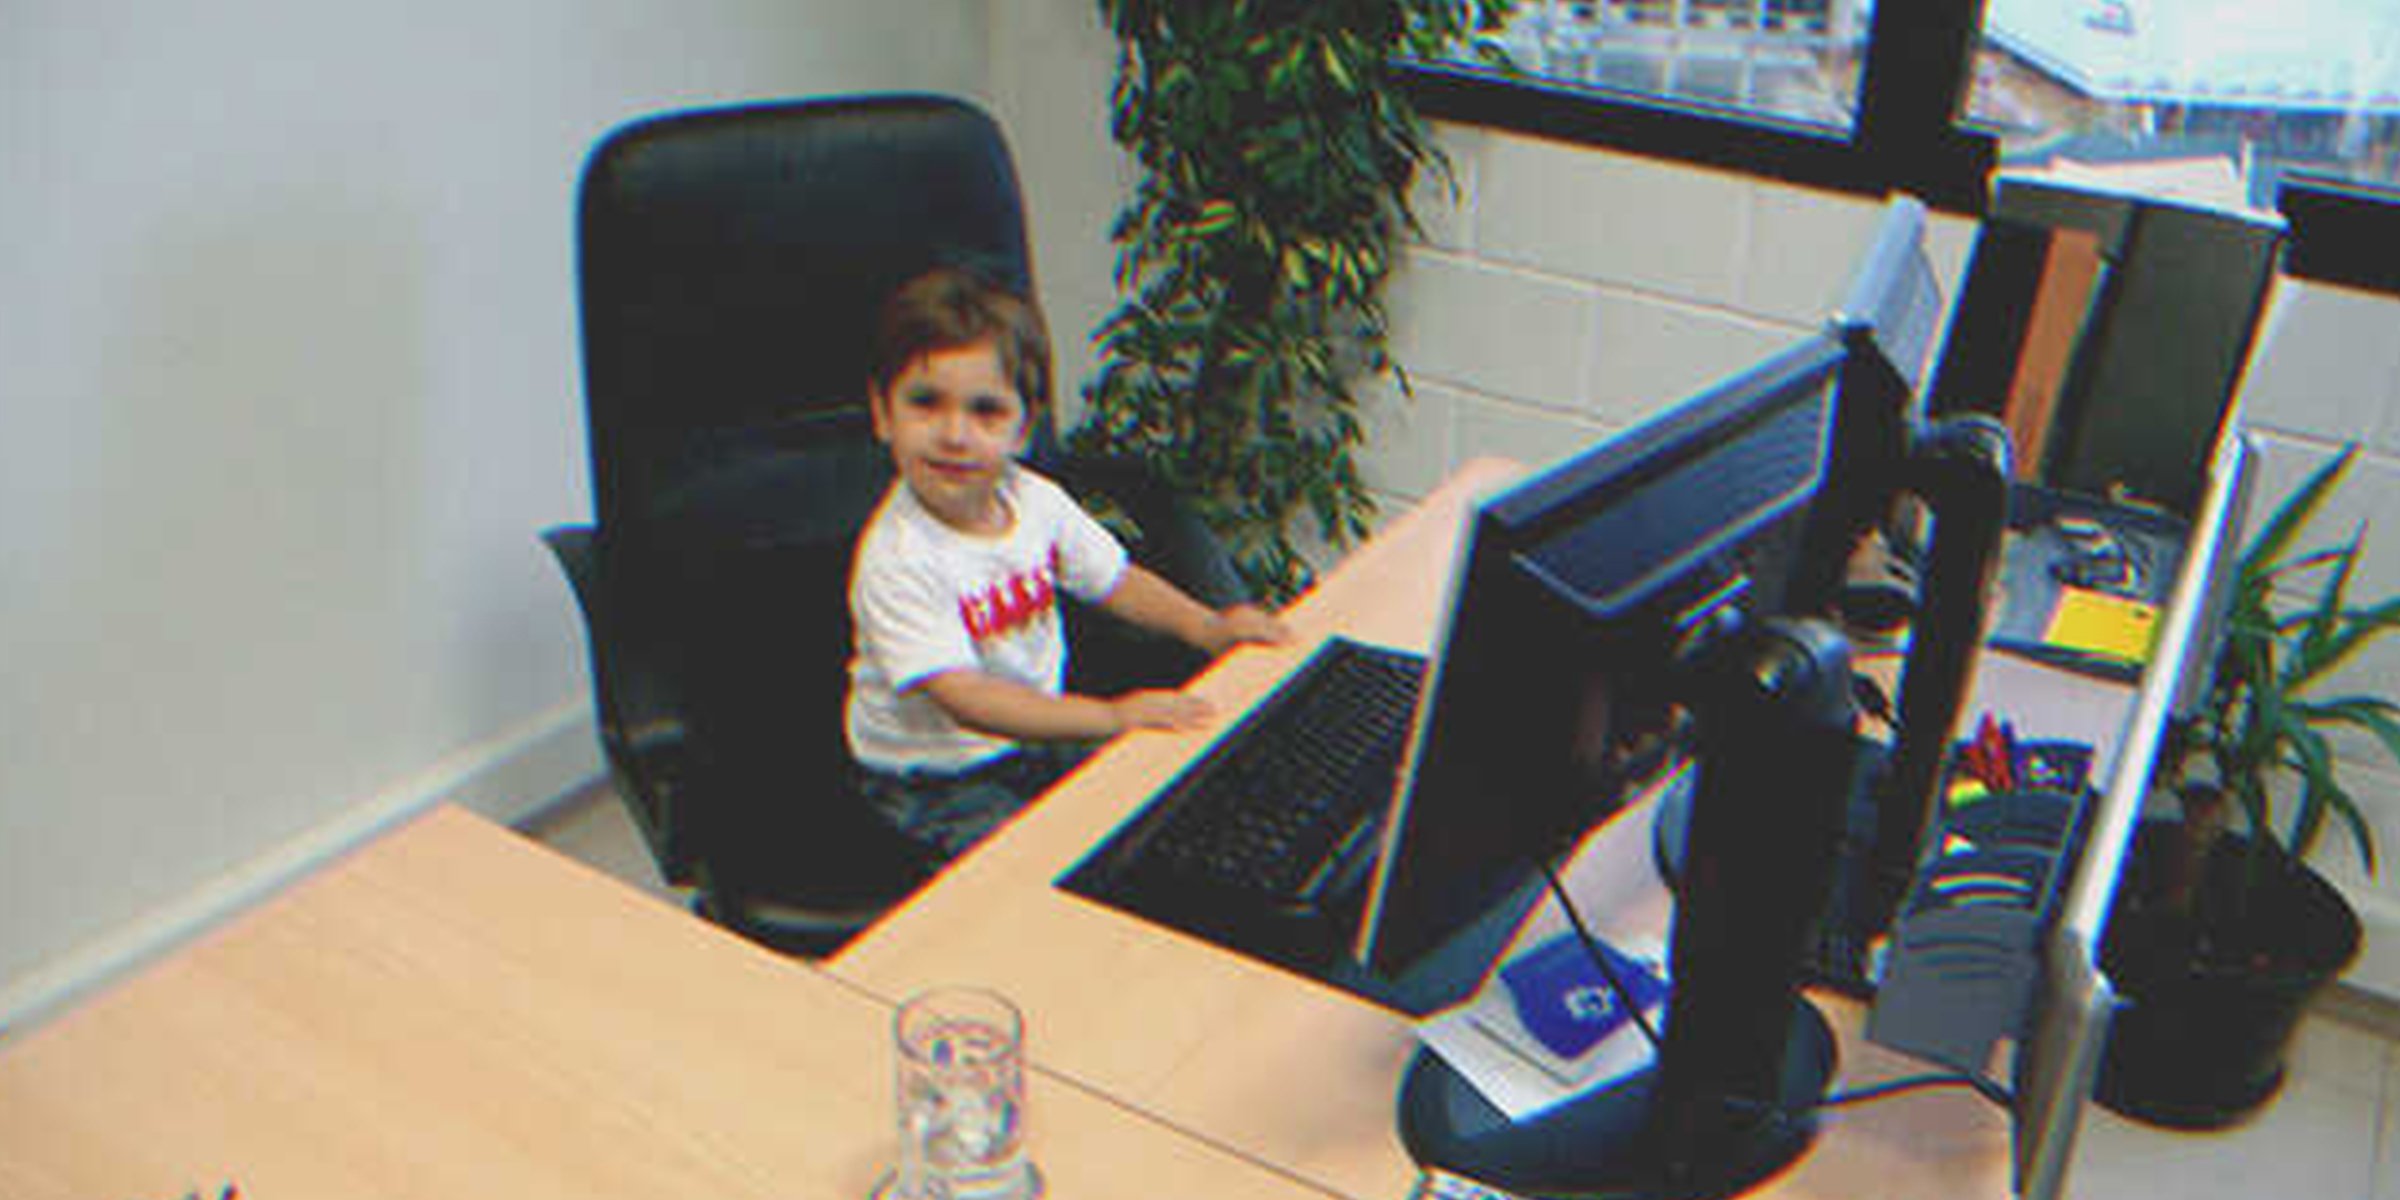 Niño frente a una computadora | Foto: flickr.com/Mario A.P. (CC BY-SA 2.0)